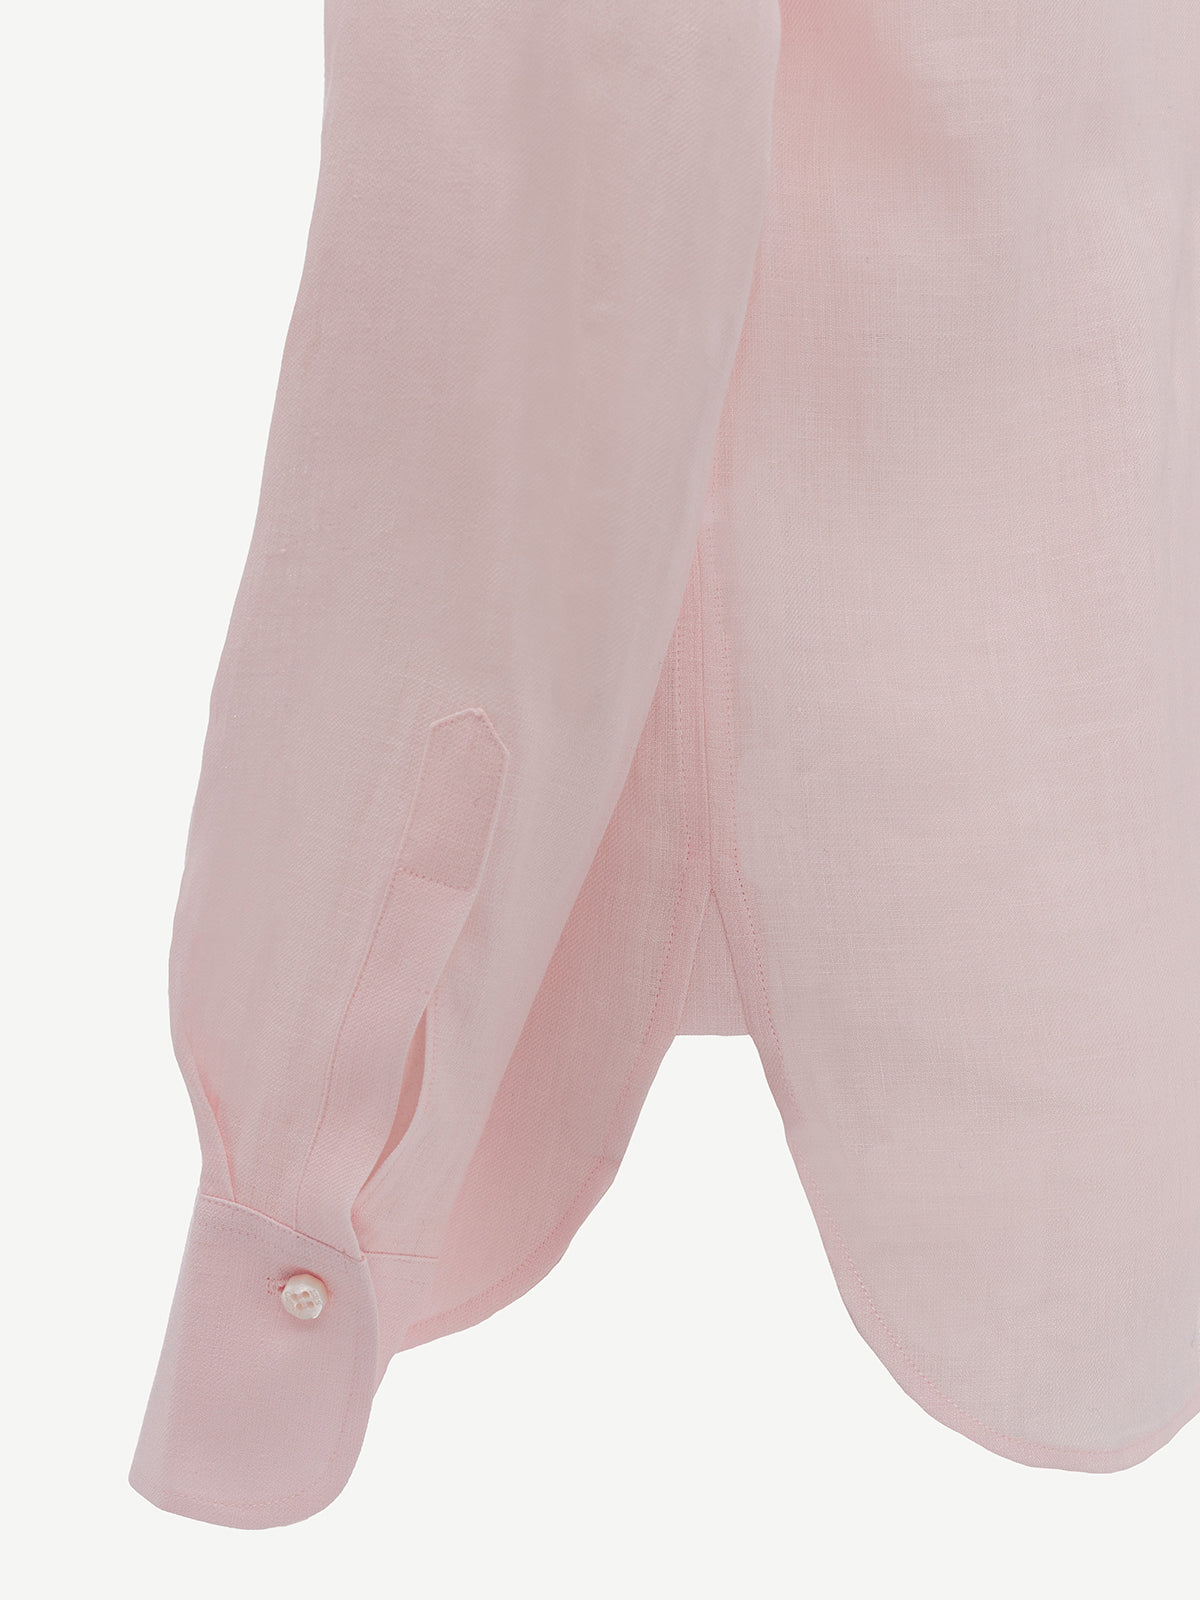 Classy linen shirt for woman 100% Capri pink shirt detail